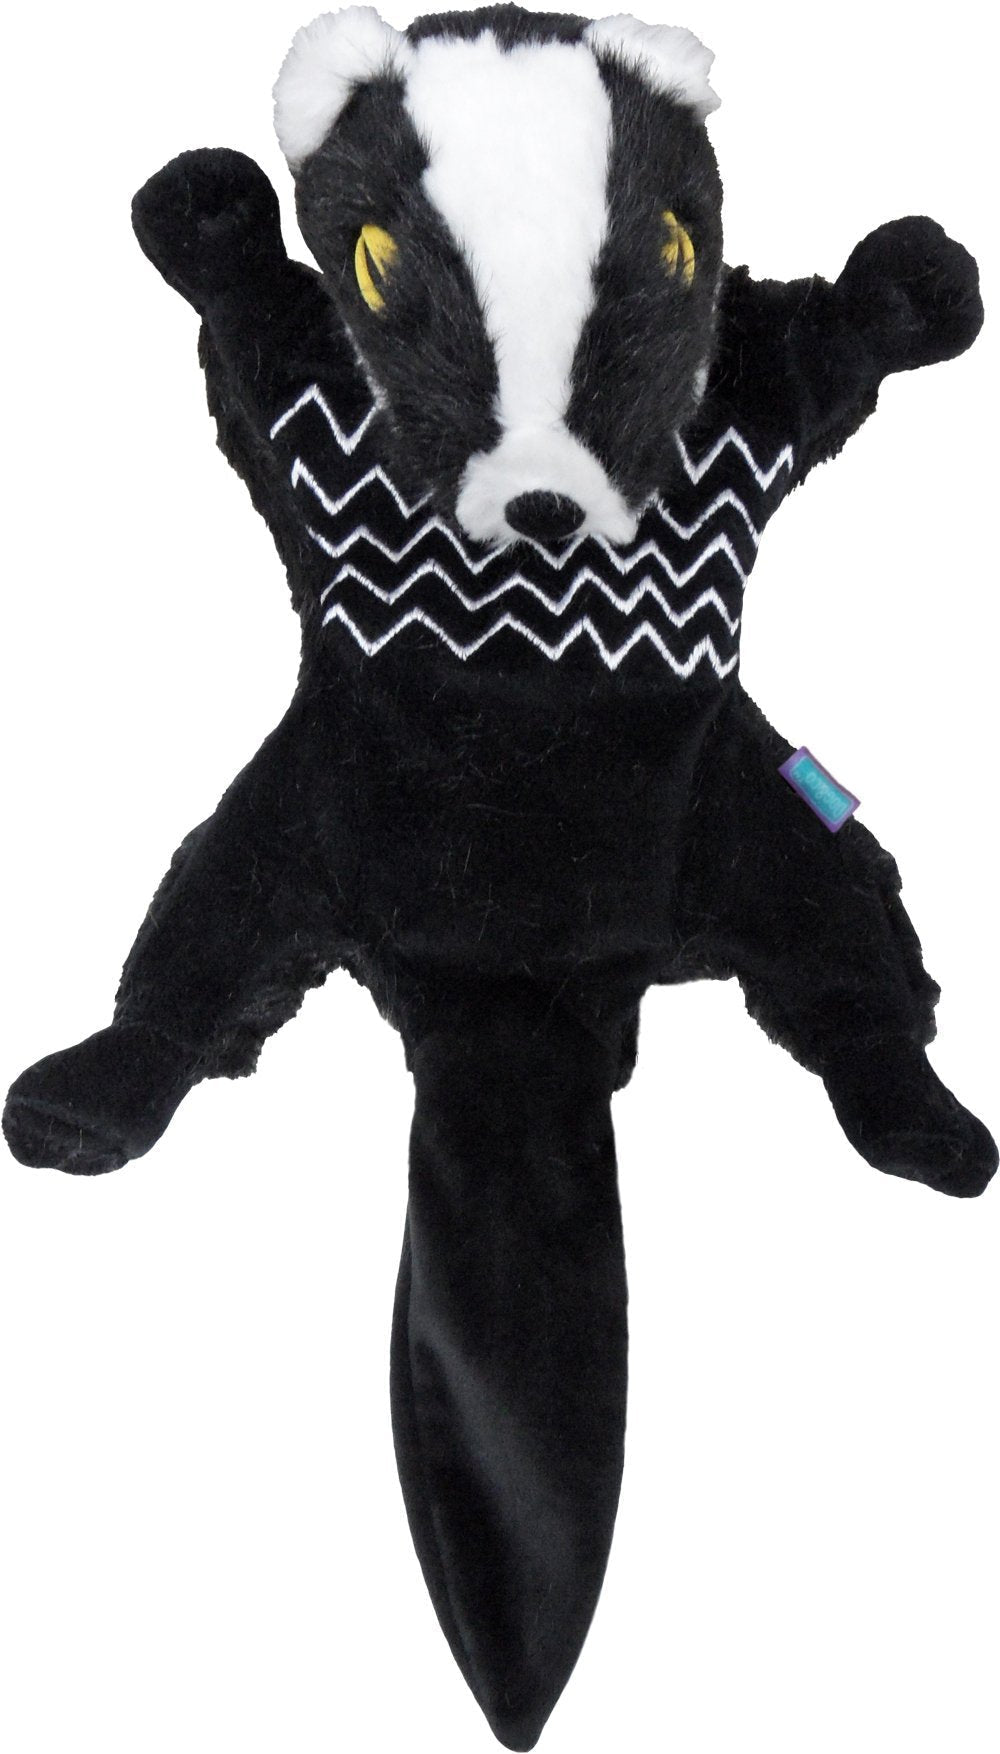 Dog & Co Country Badger Roadkill Dog Toy, Large, Black and White - PawsPlanet Australia